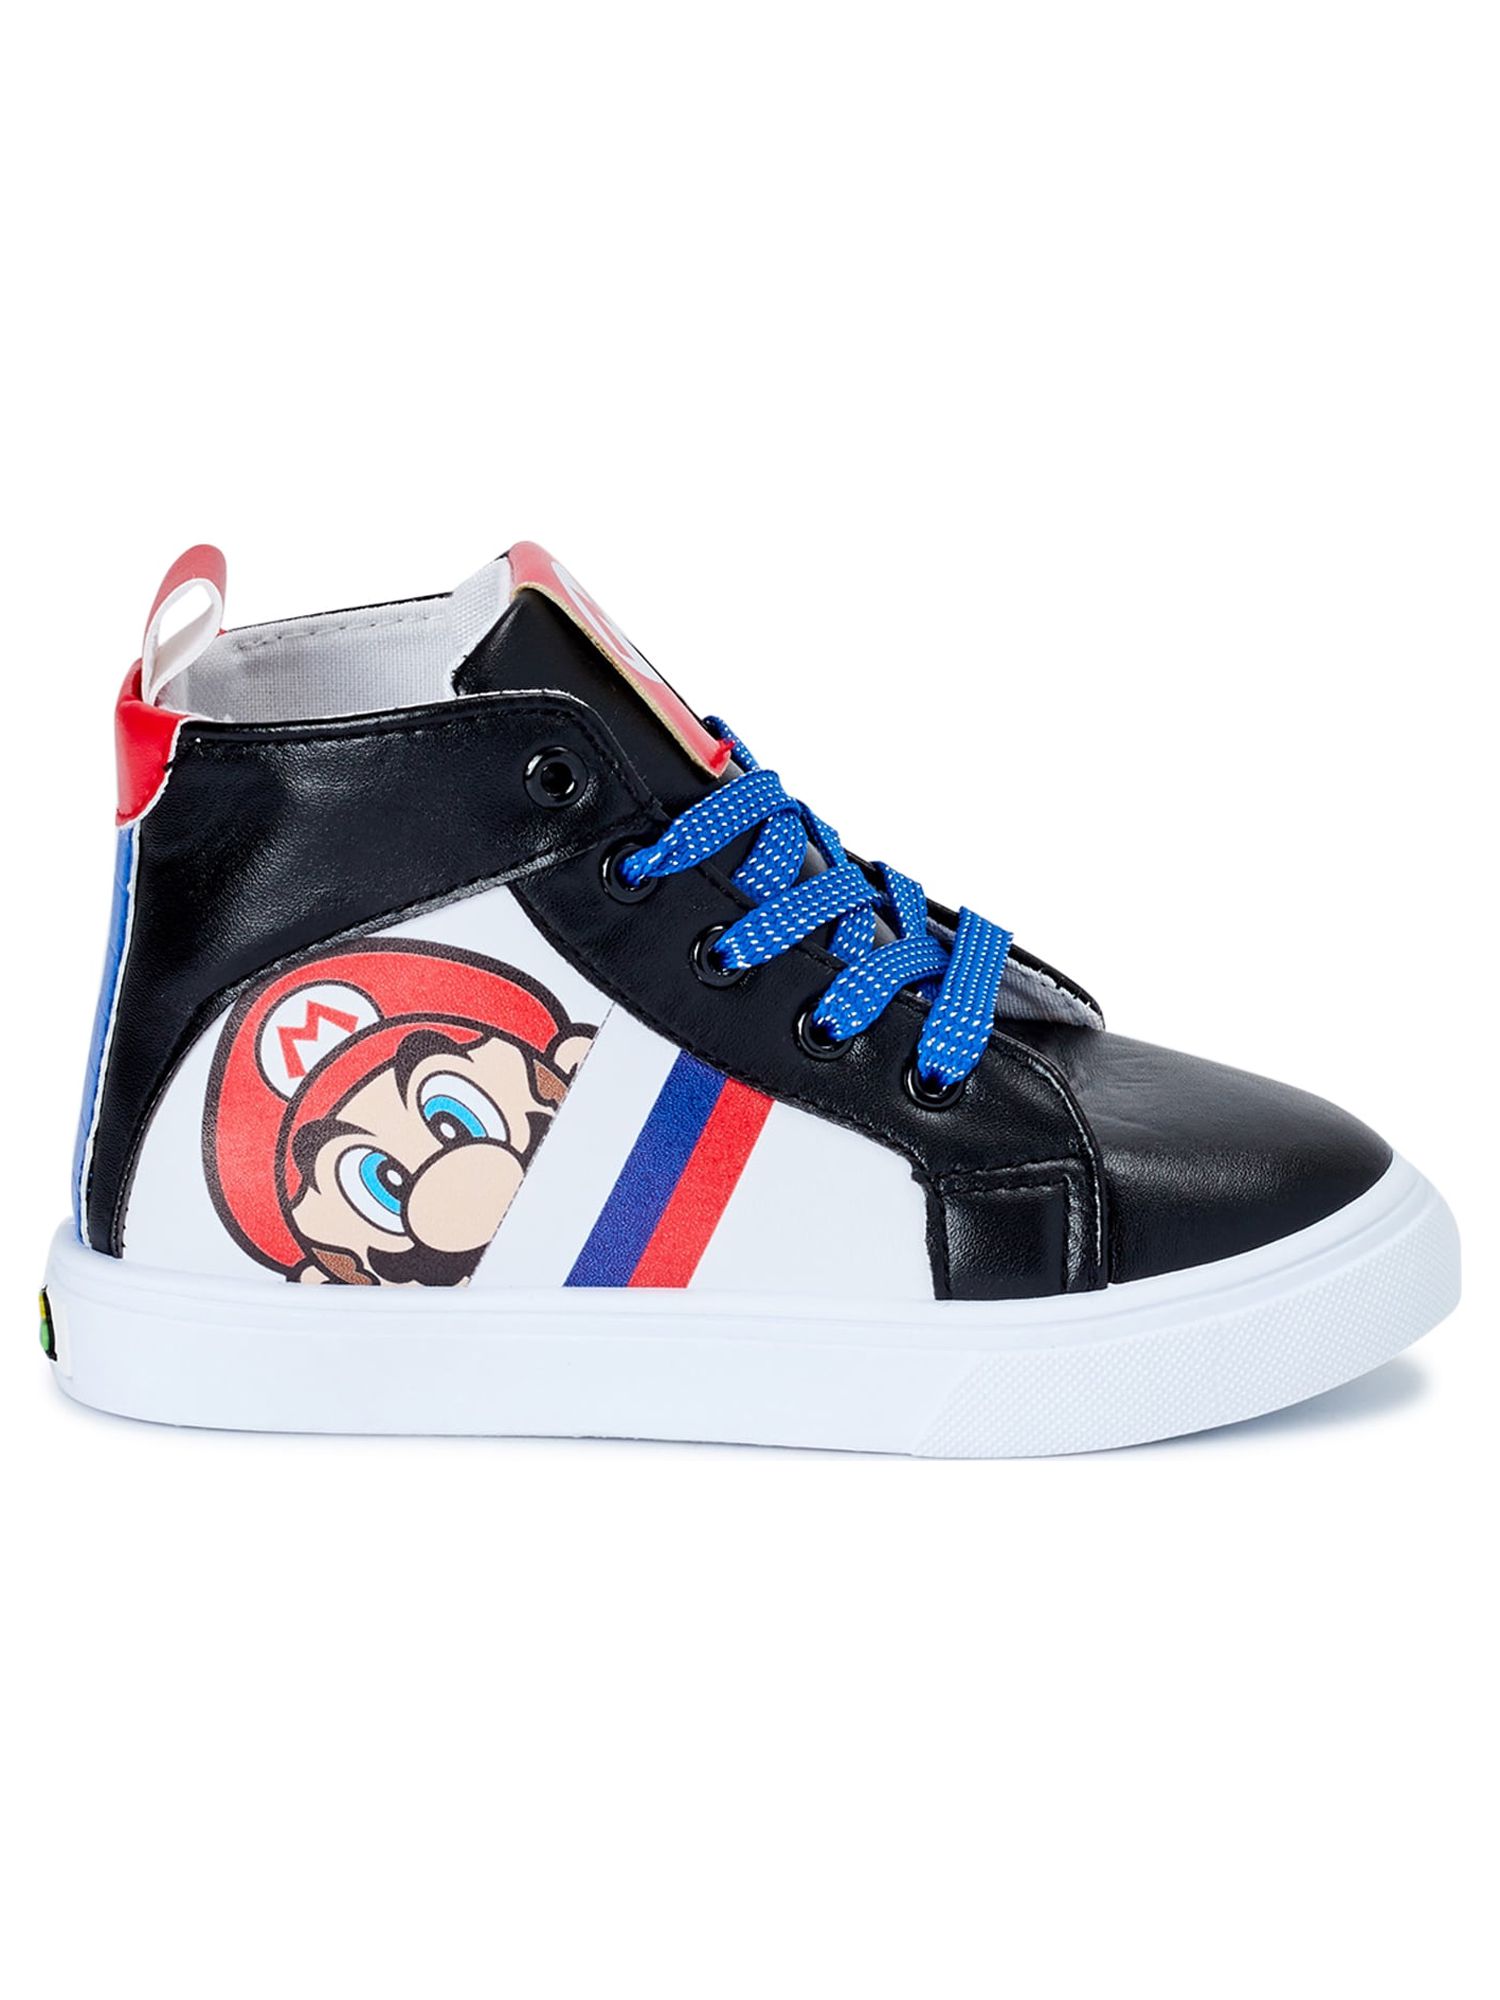 Mario Boys High Top Sneakers - image 2 of 6